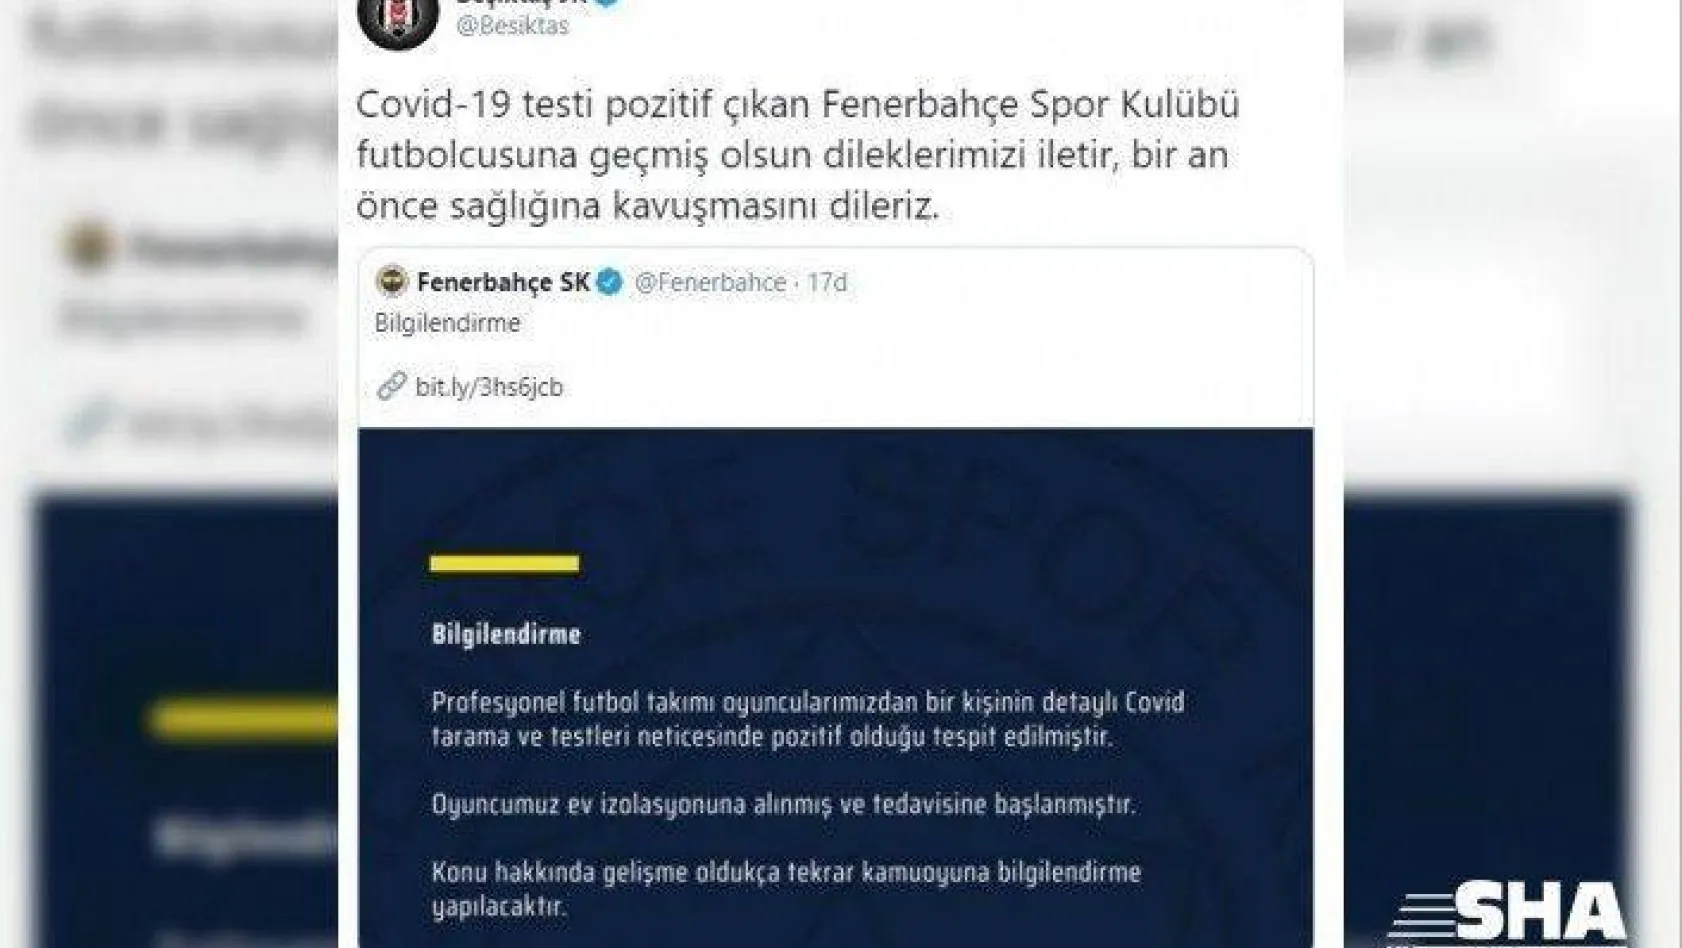 Beşiktaş'tan Fenerbahçe'ye geçmiş olsun mesajı